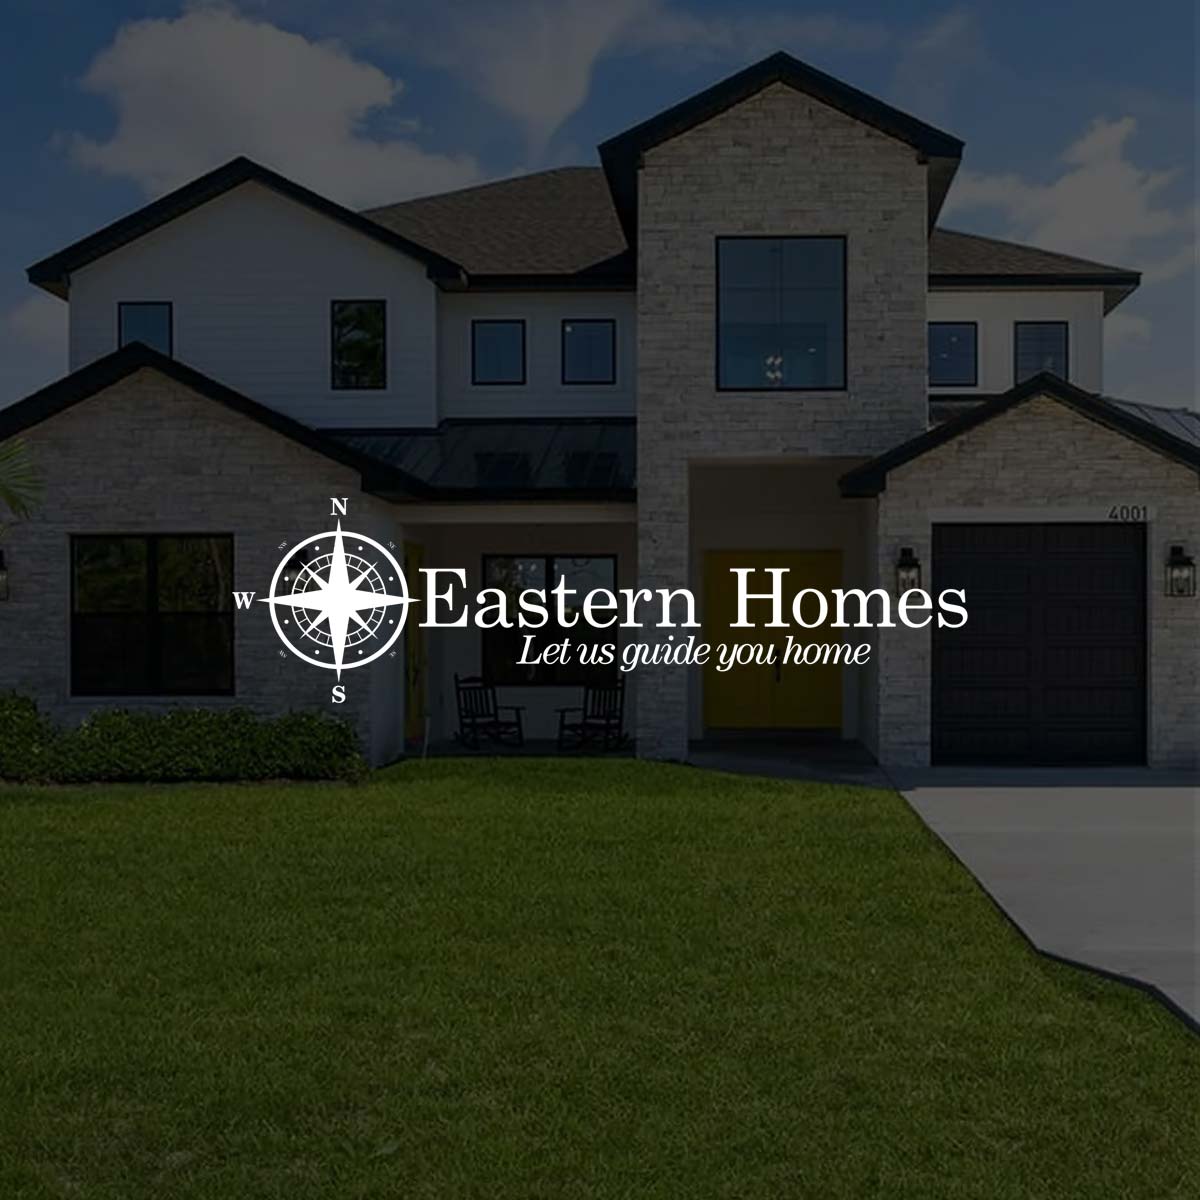 Eastern Homes Website Design & Development for a Home Building Company | PixelChefs